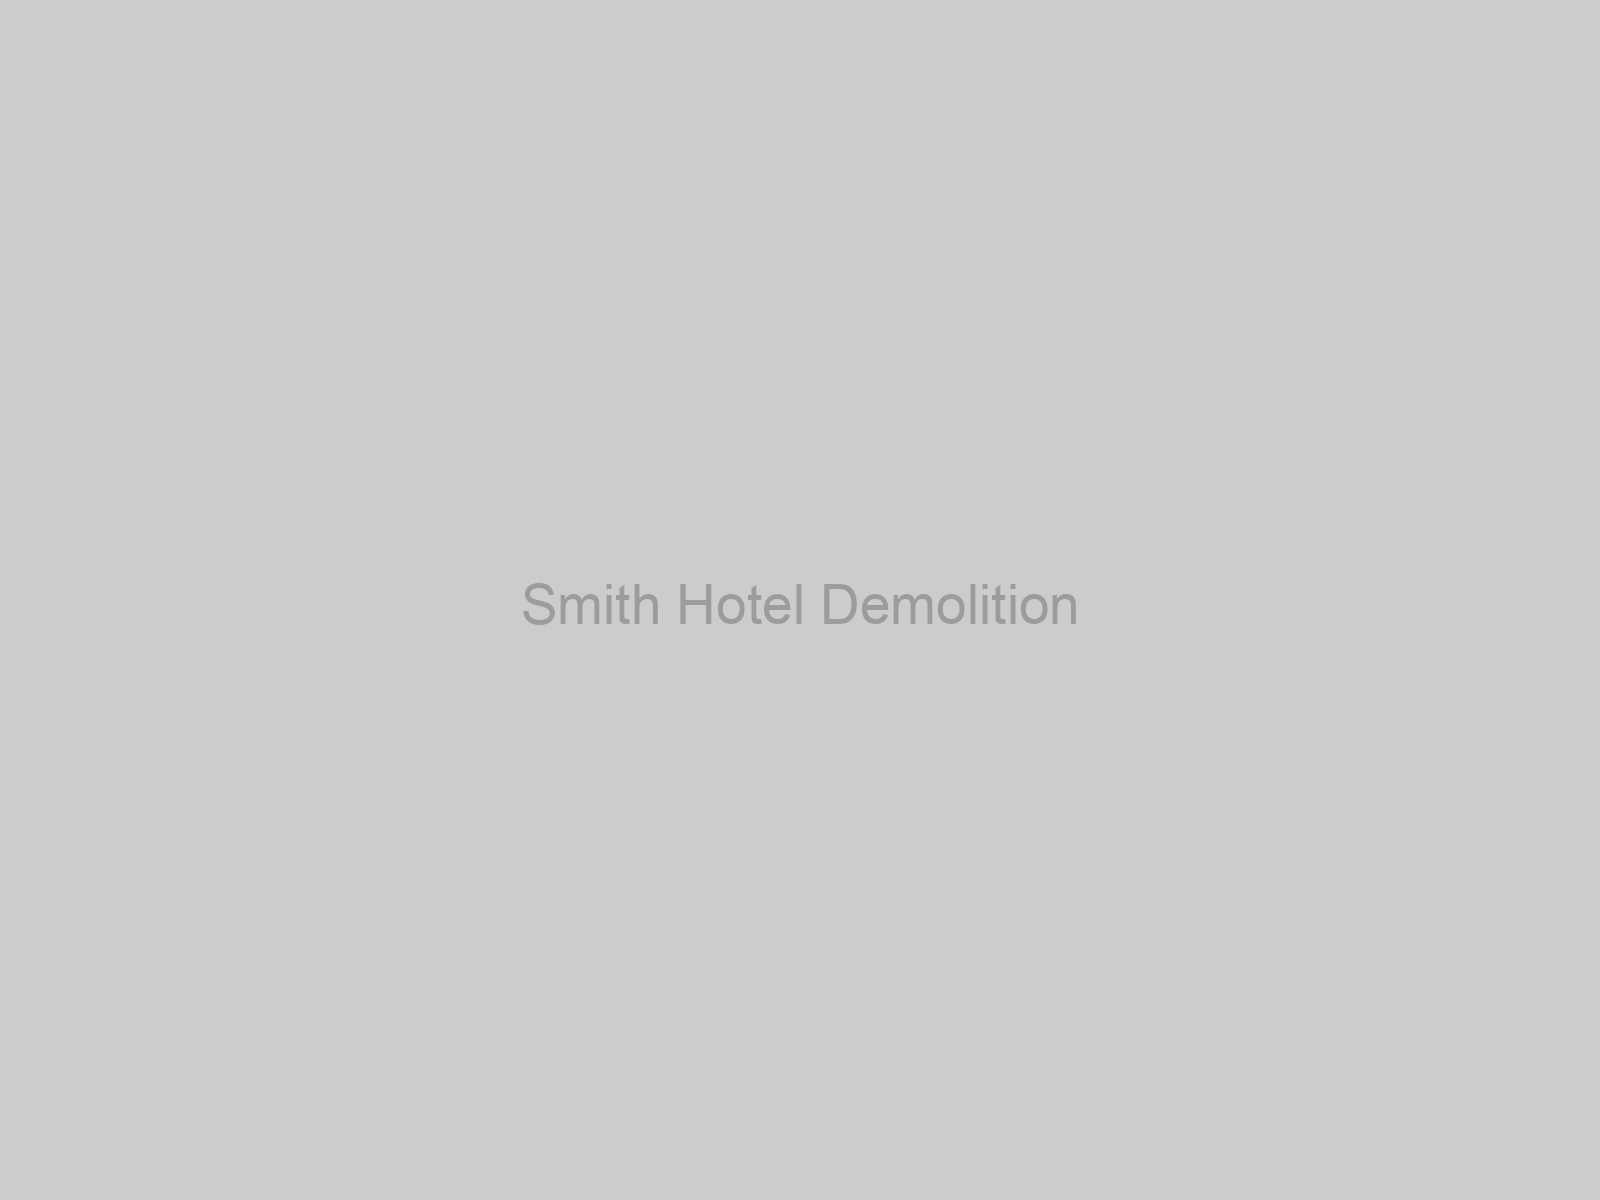 Smith Hotel Demolition